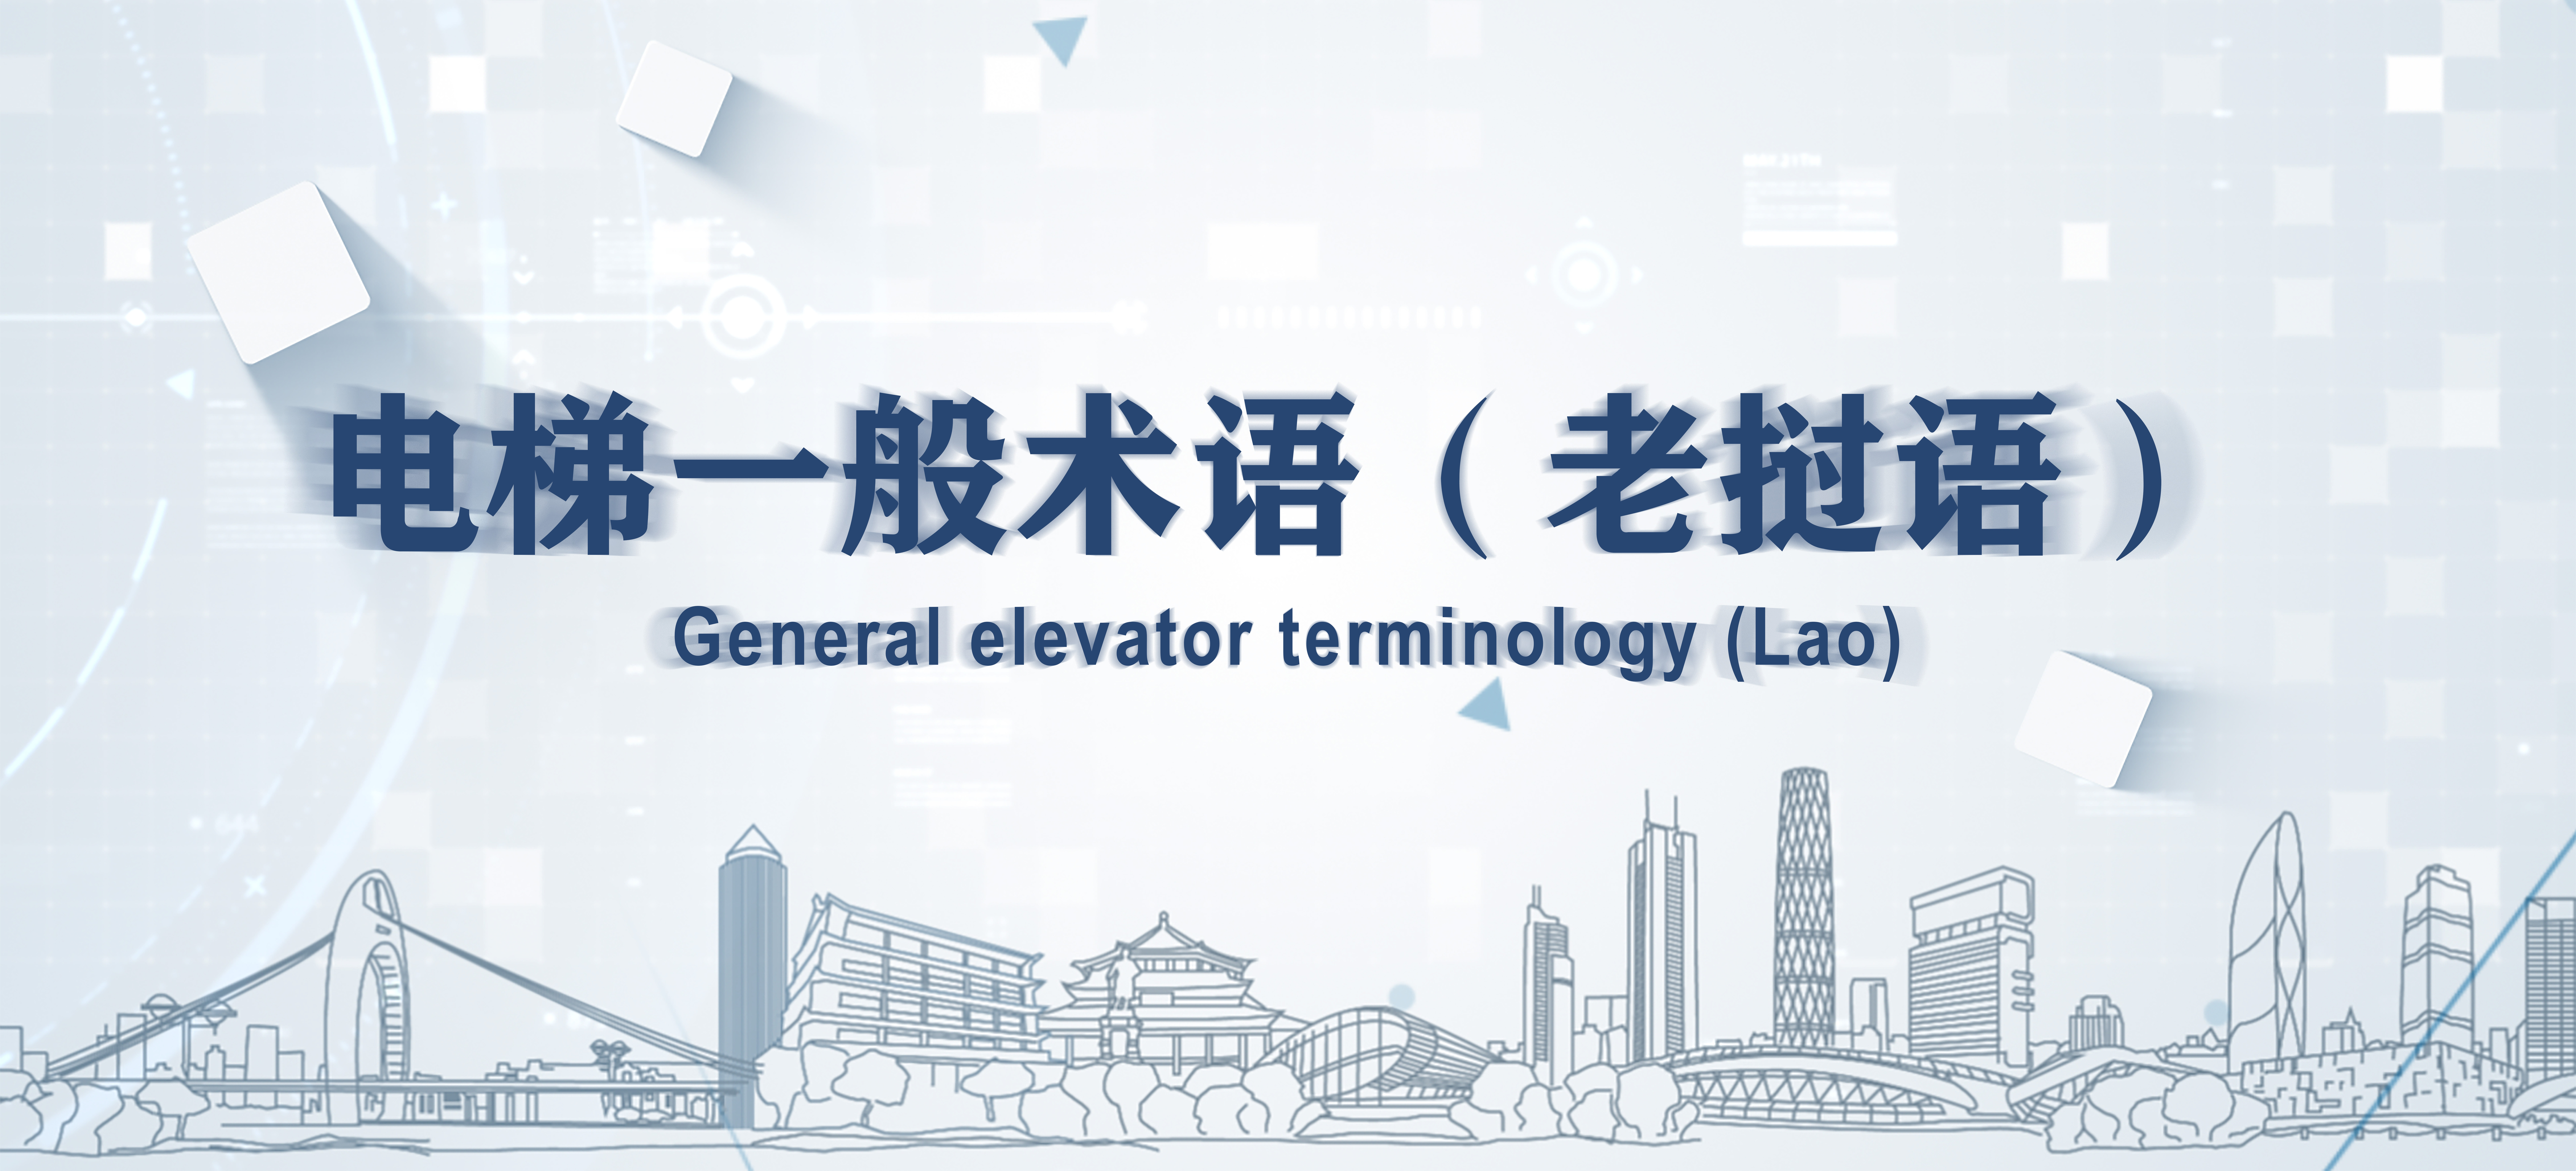 General elevator terminology (Lao)